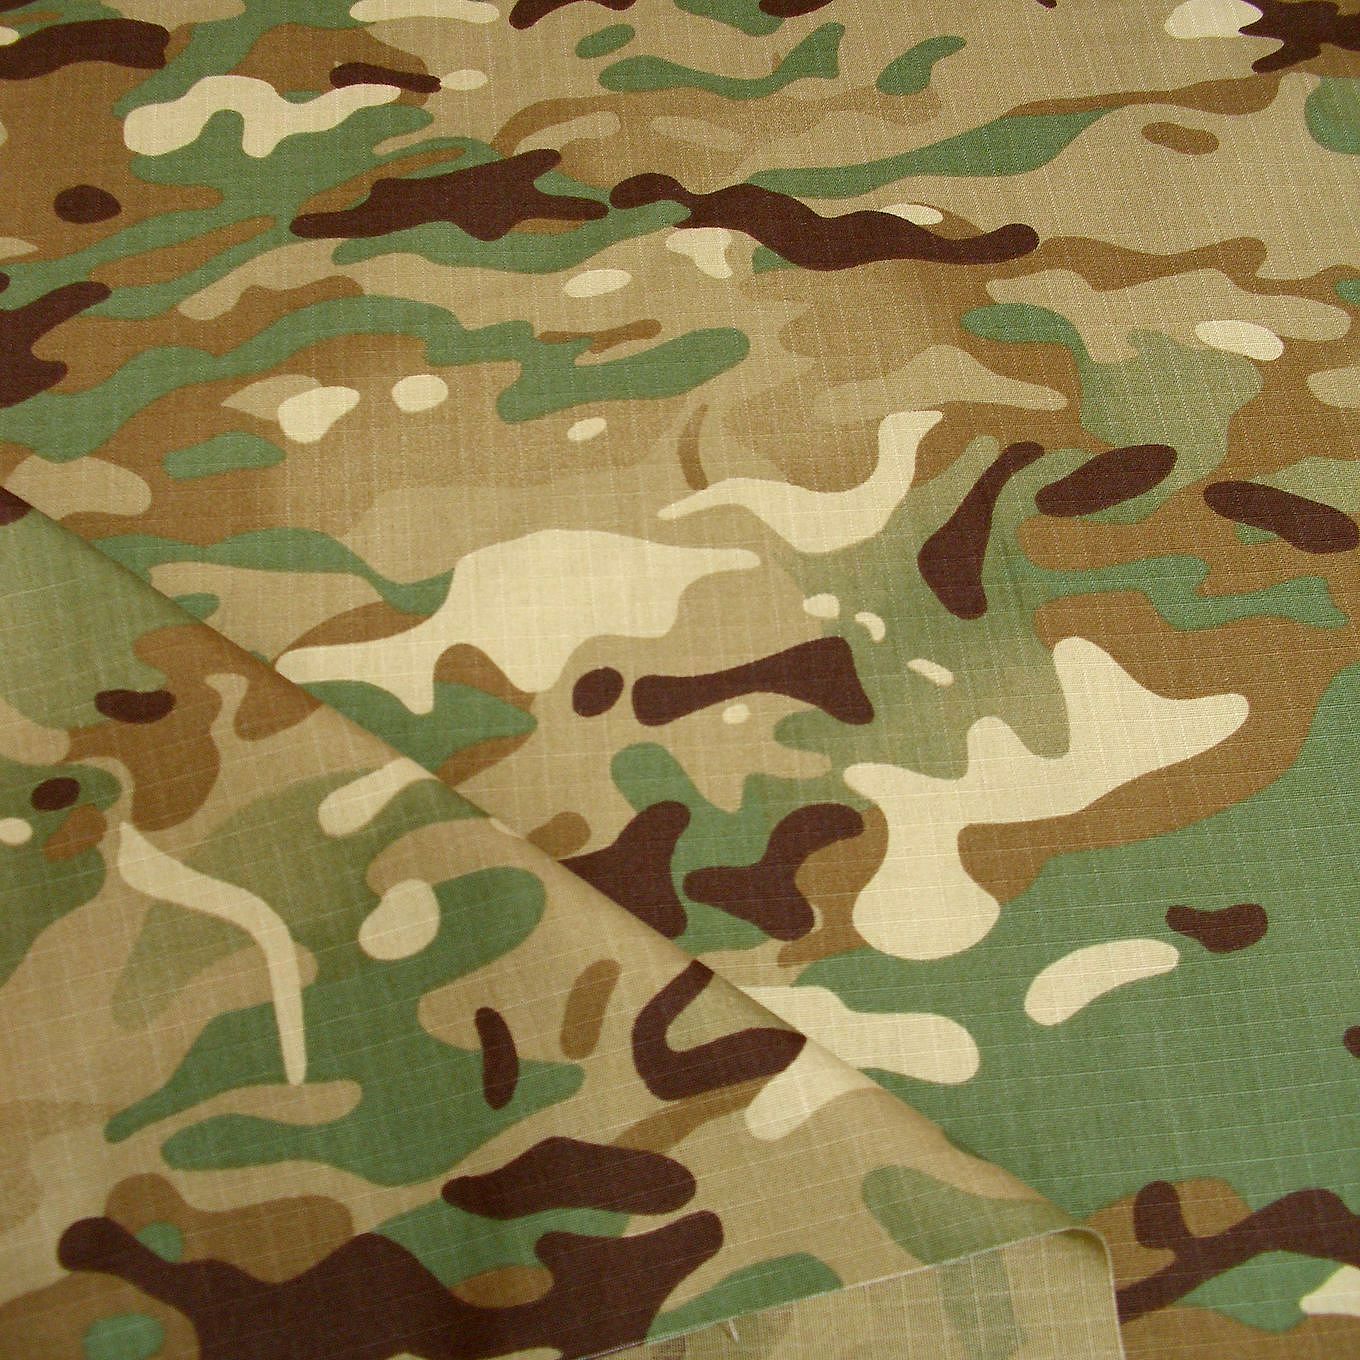 Großbritannie Camouflage Stoff Ripstop Armee Flecktarn Jacke Hose Baumwollstoff